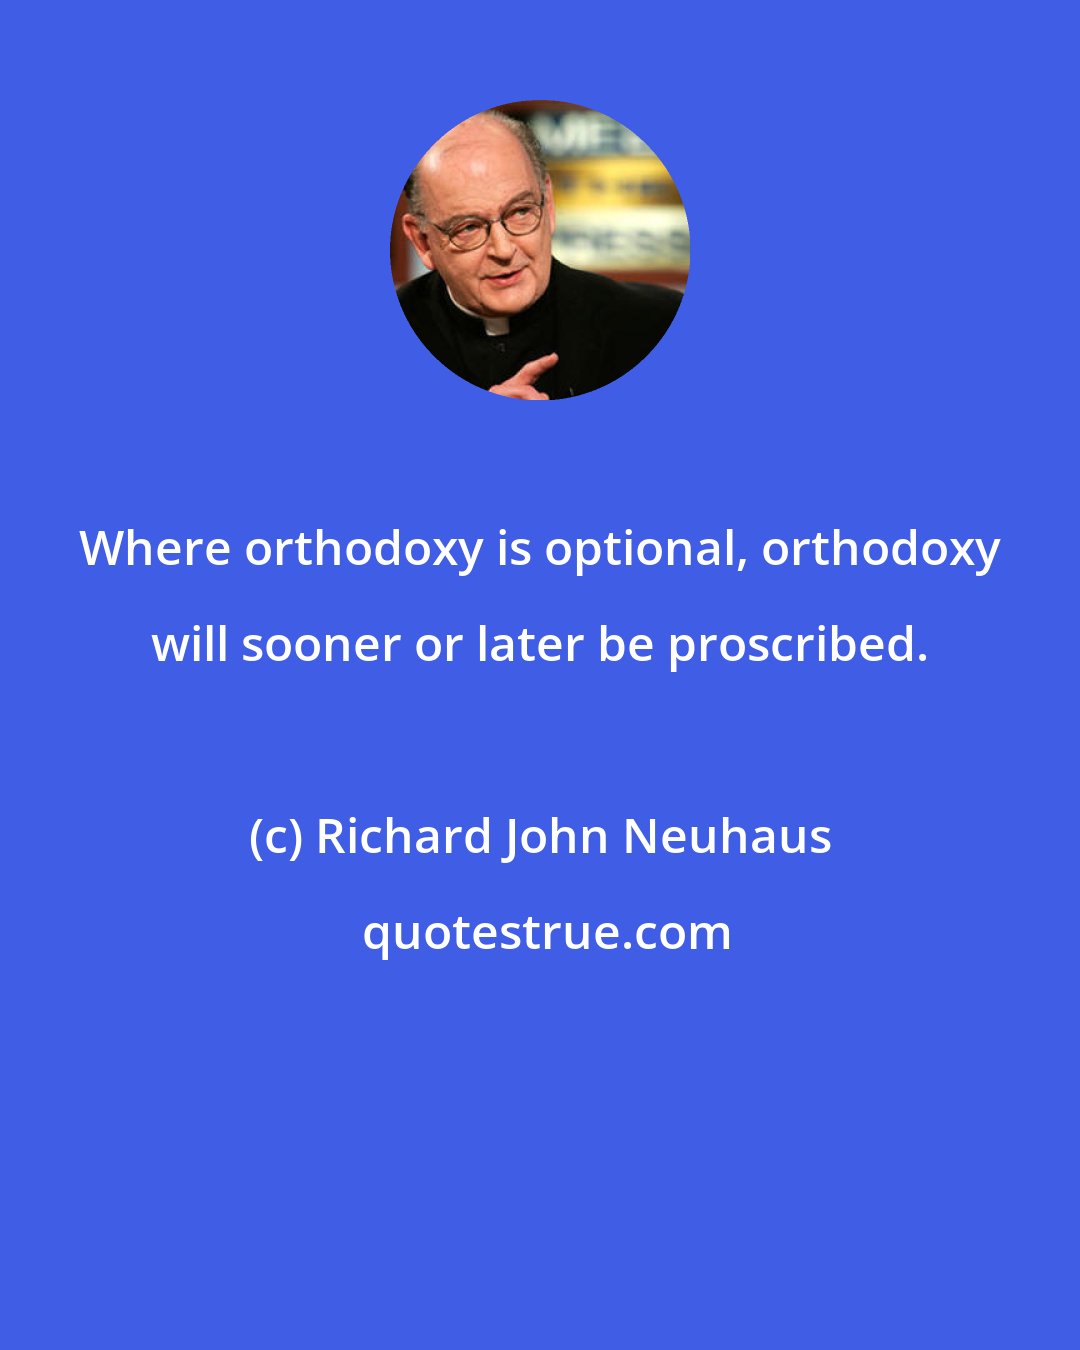 Richard John Neuhaus: Where orthodoxy is optional, orthodoxy will sooner or later be proscribed.